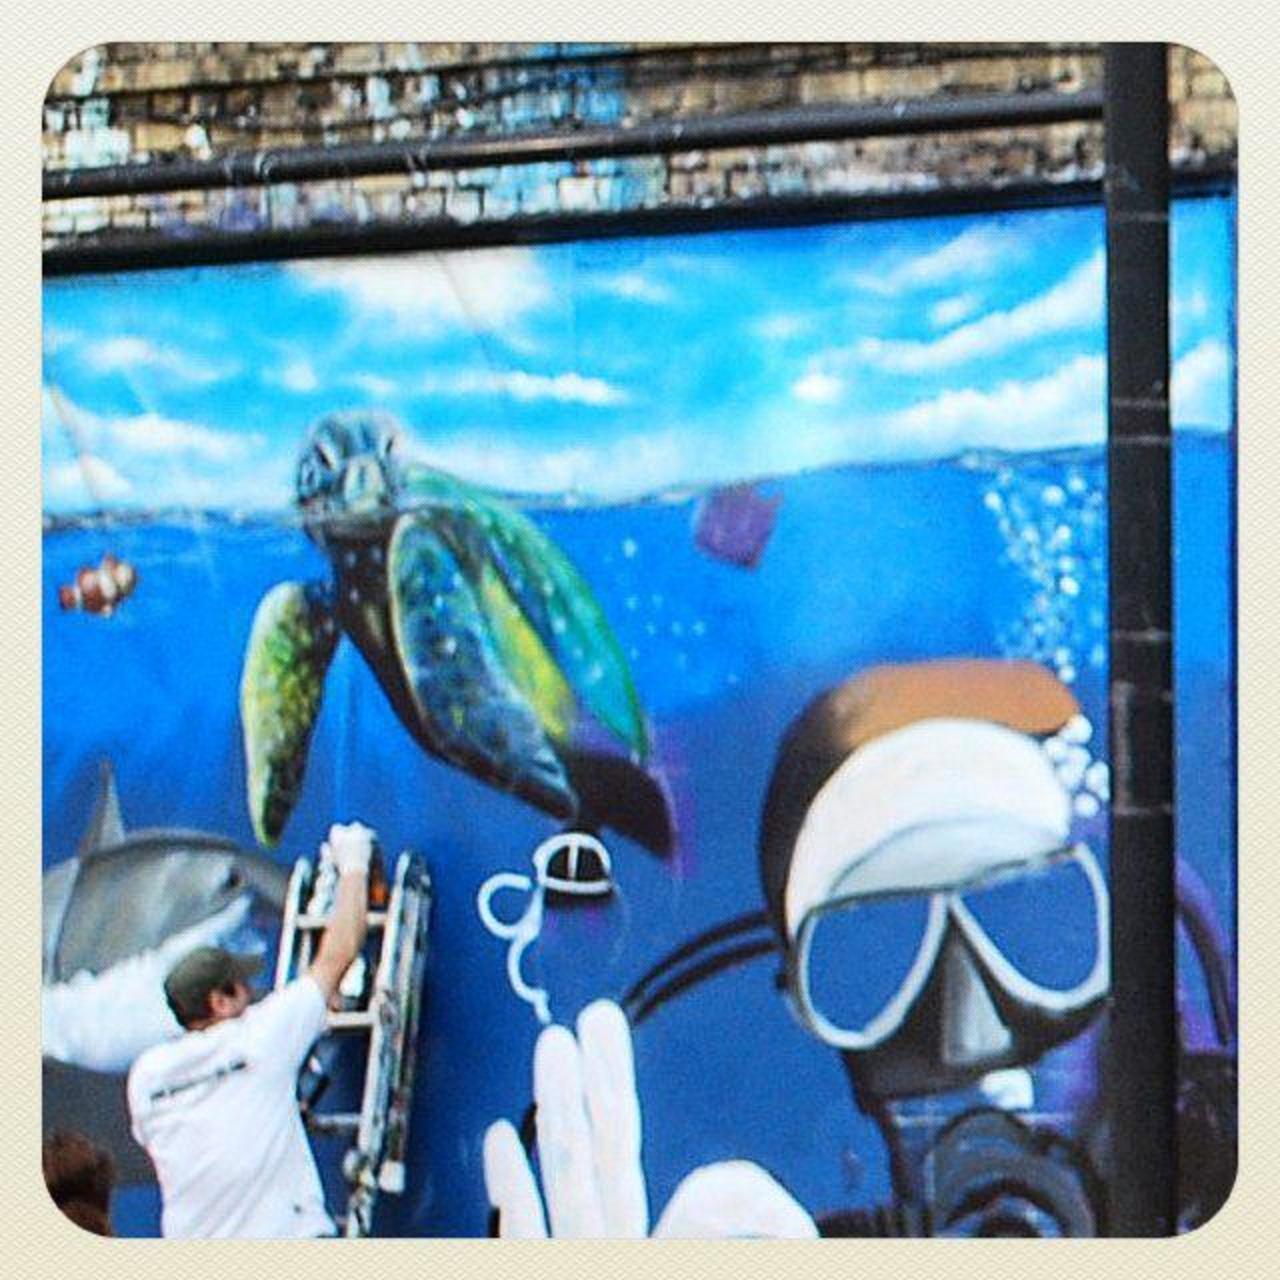 WiP art by Gnasher  
#Graffiti #StreetArt #UrbanArt #GnasherMurals #WiP #BehindTheCurtain #ShoreditchCurtain #Shor… http://t.co/AOEnNvcXwE